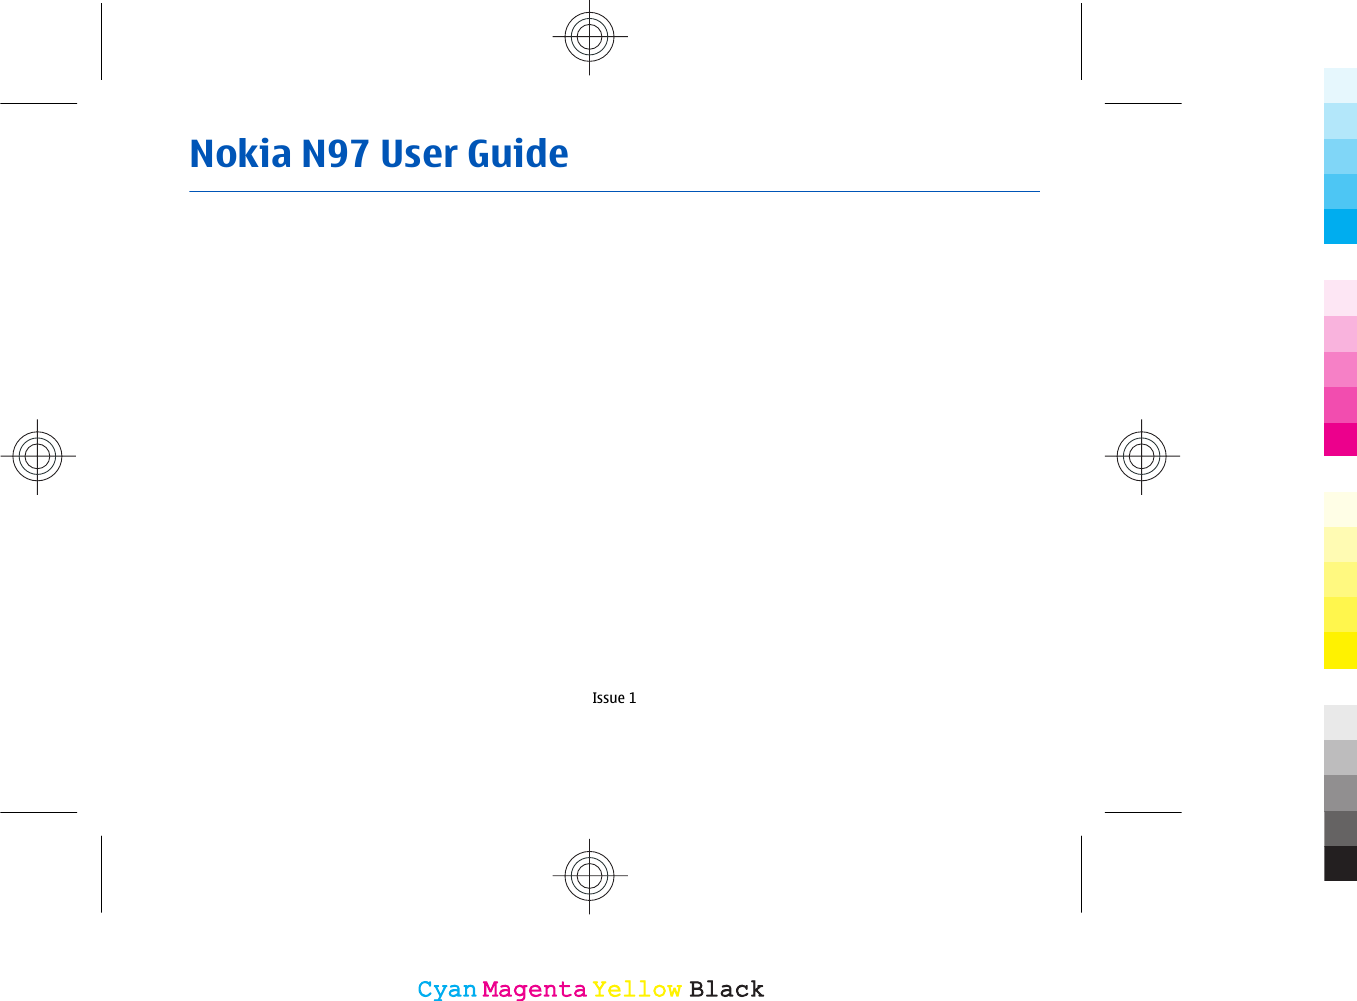 Nokia N97 User GuideIssue 1CyanCyanMagentaMagentaYellowYellowBlackBlack